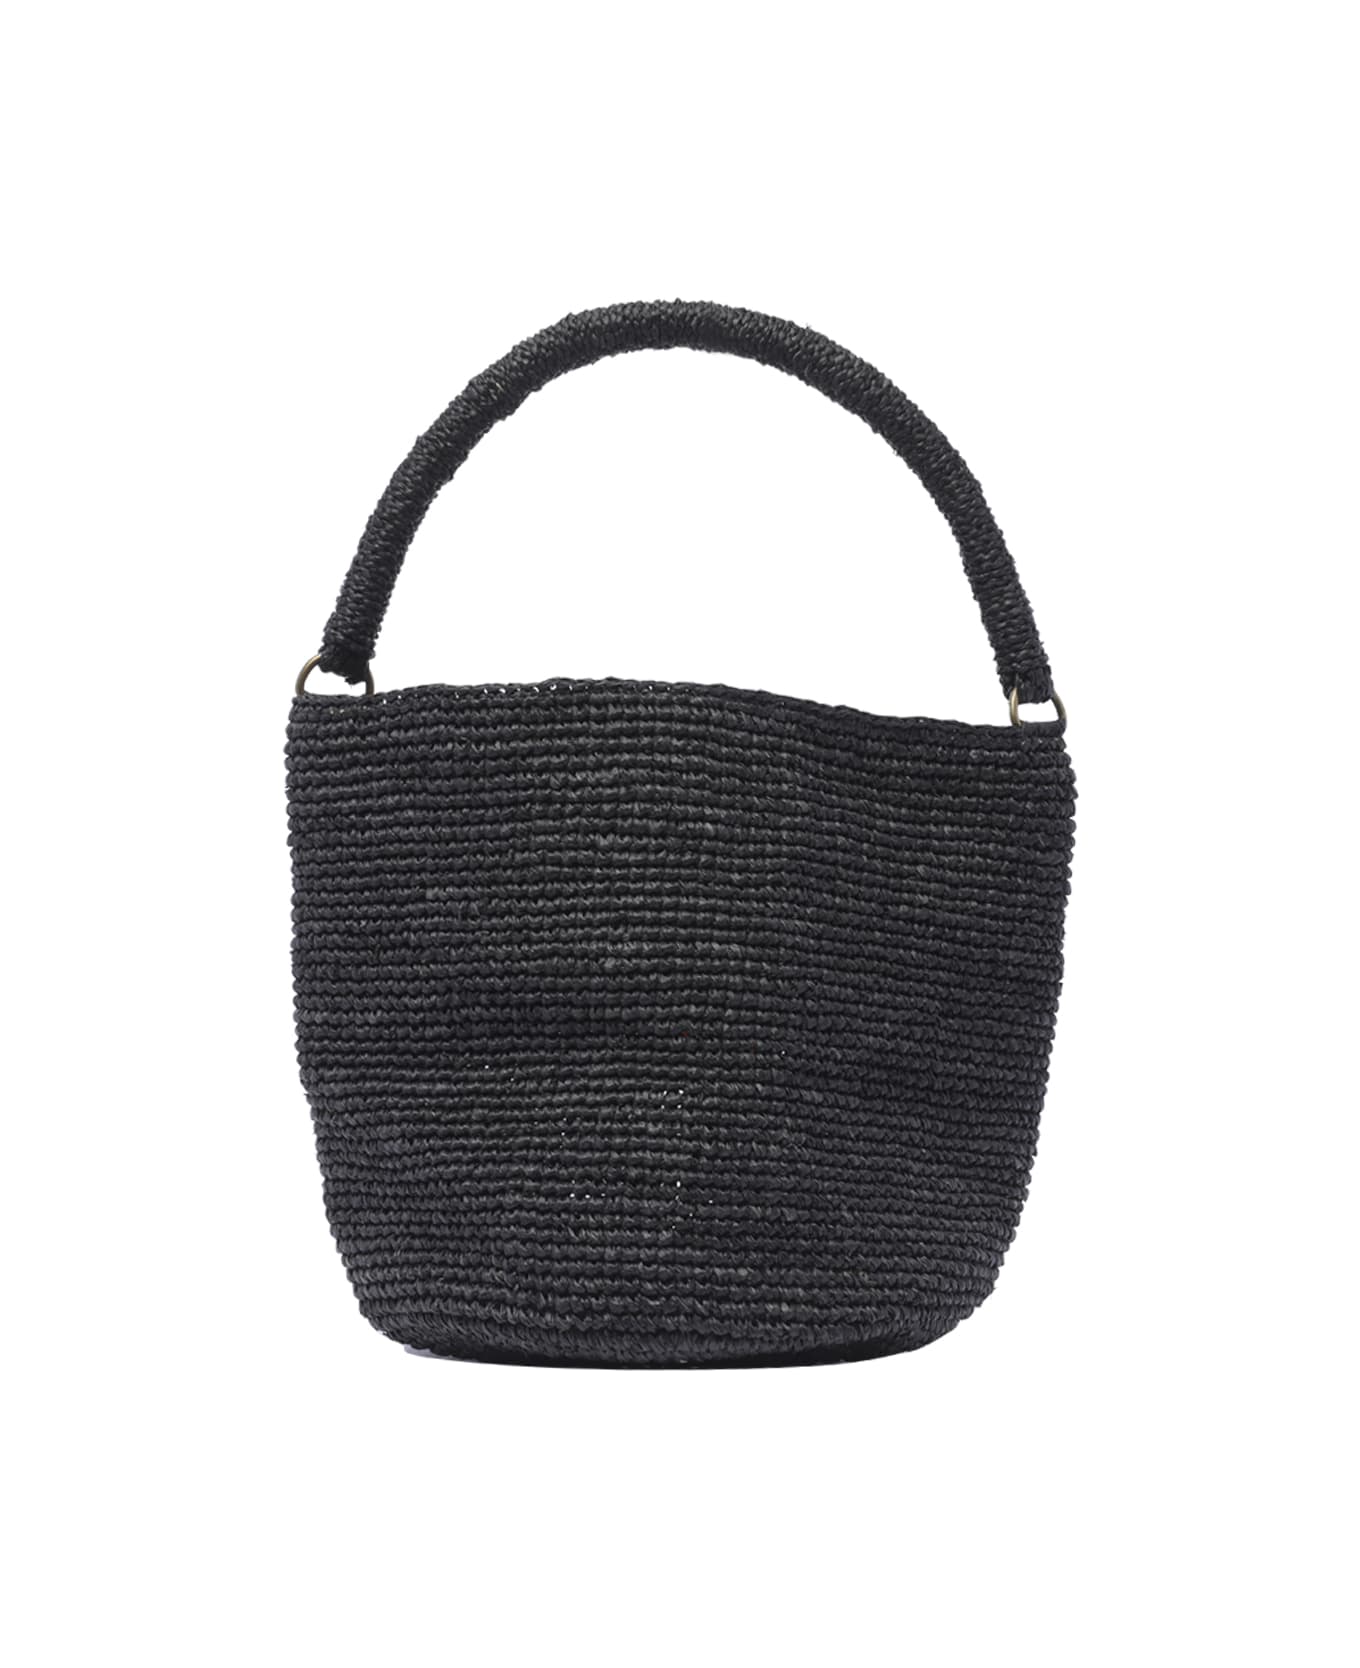 Ibeliv Siny Bucket Bag - Black